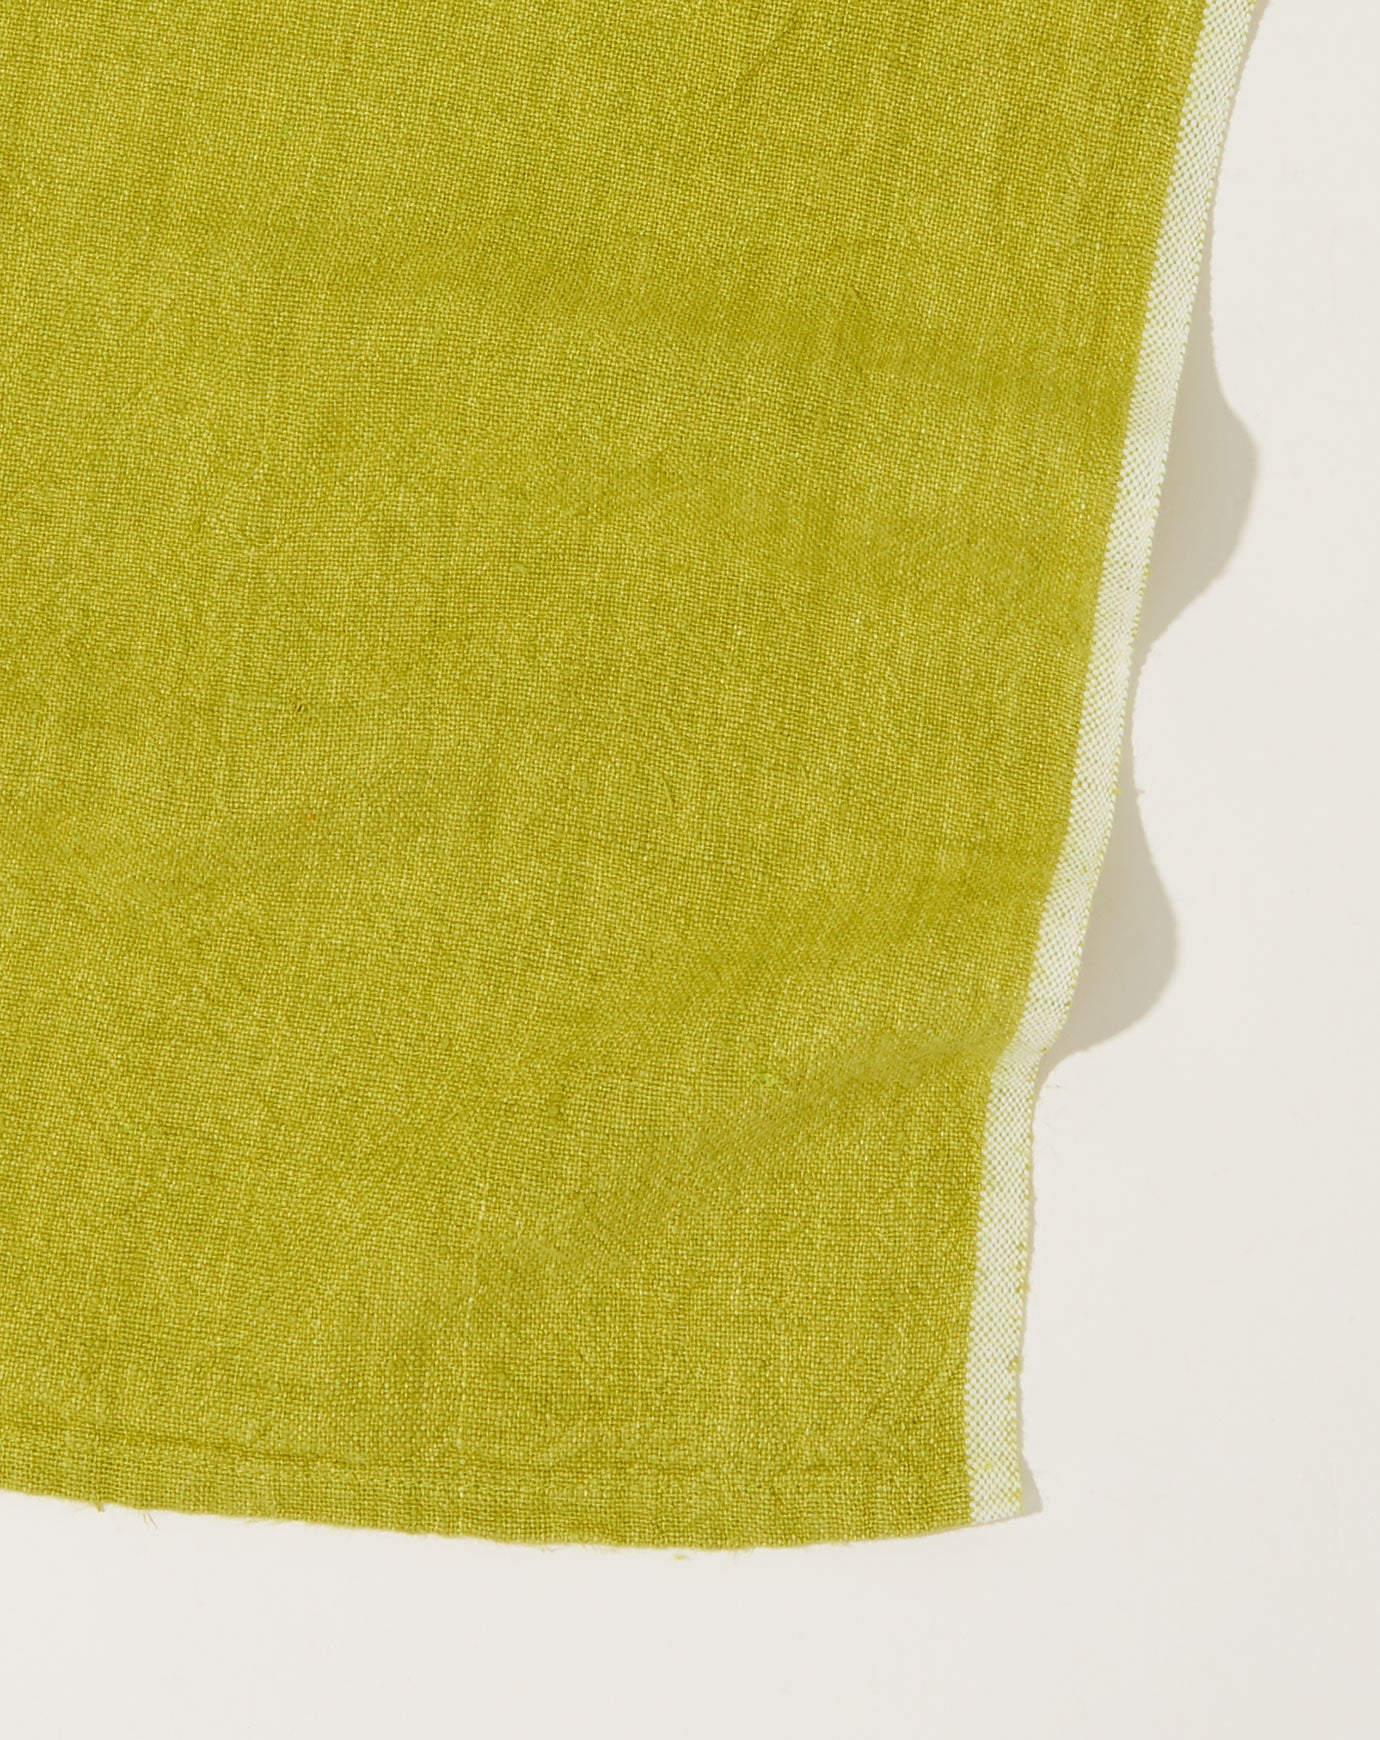 Caravan Chunky Linen Towels in Lime, Set of 2